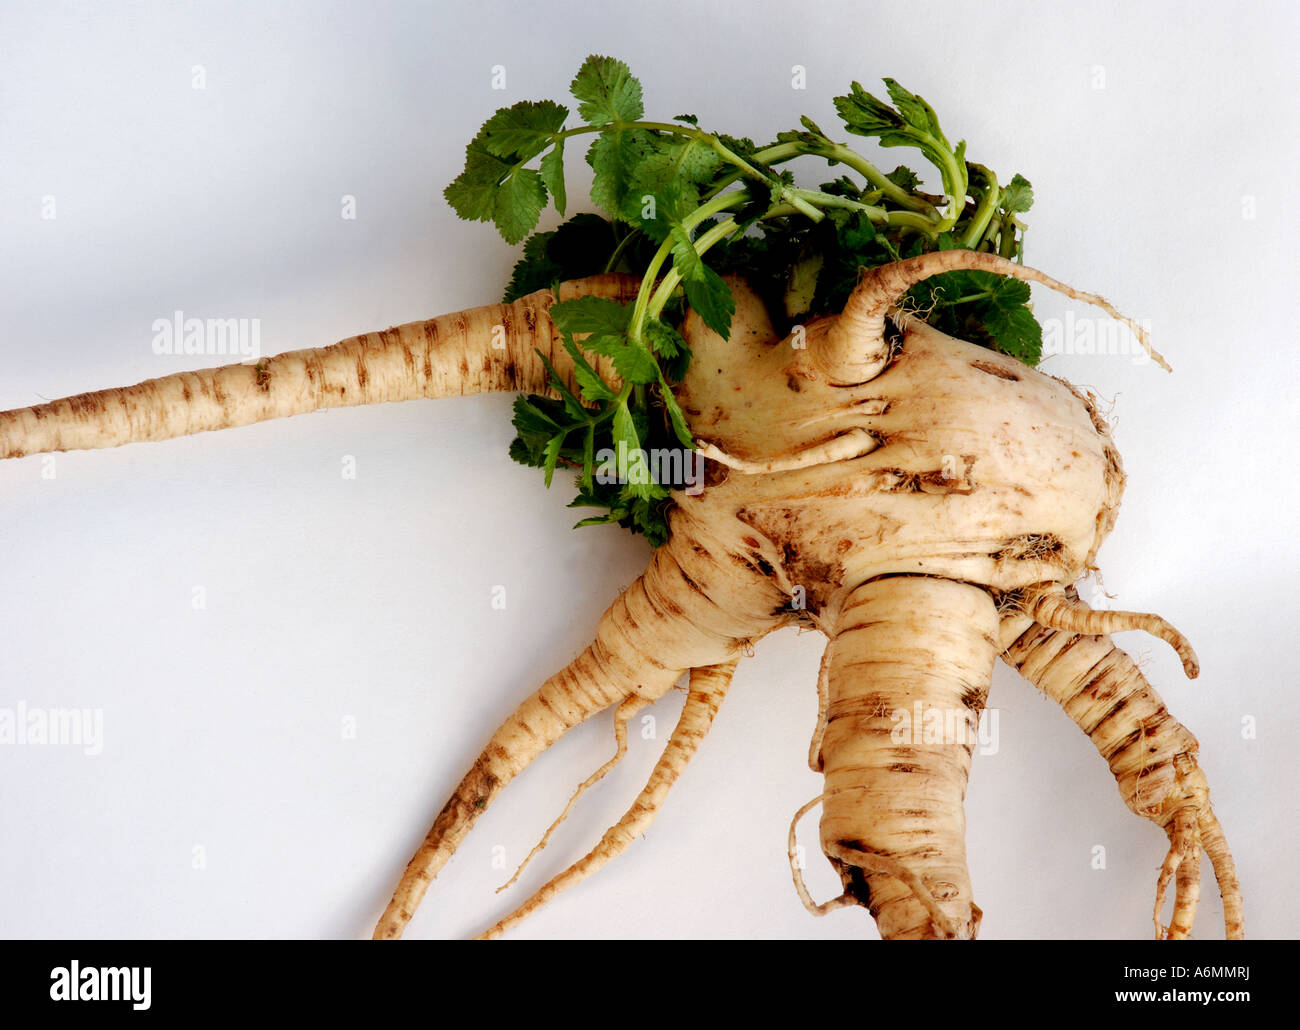 Misshapen parsnip Stock Photo